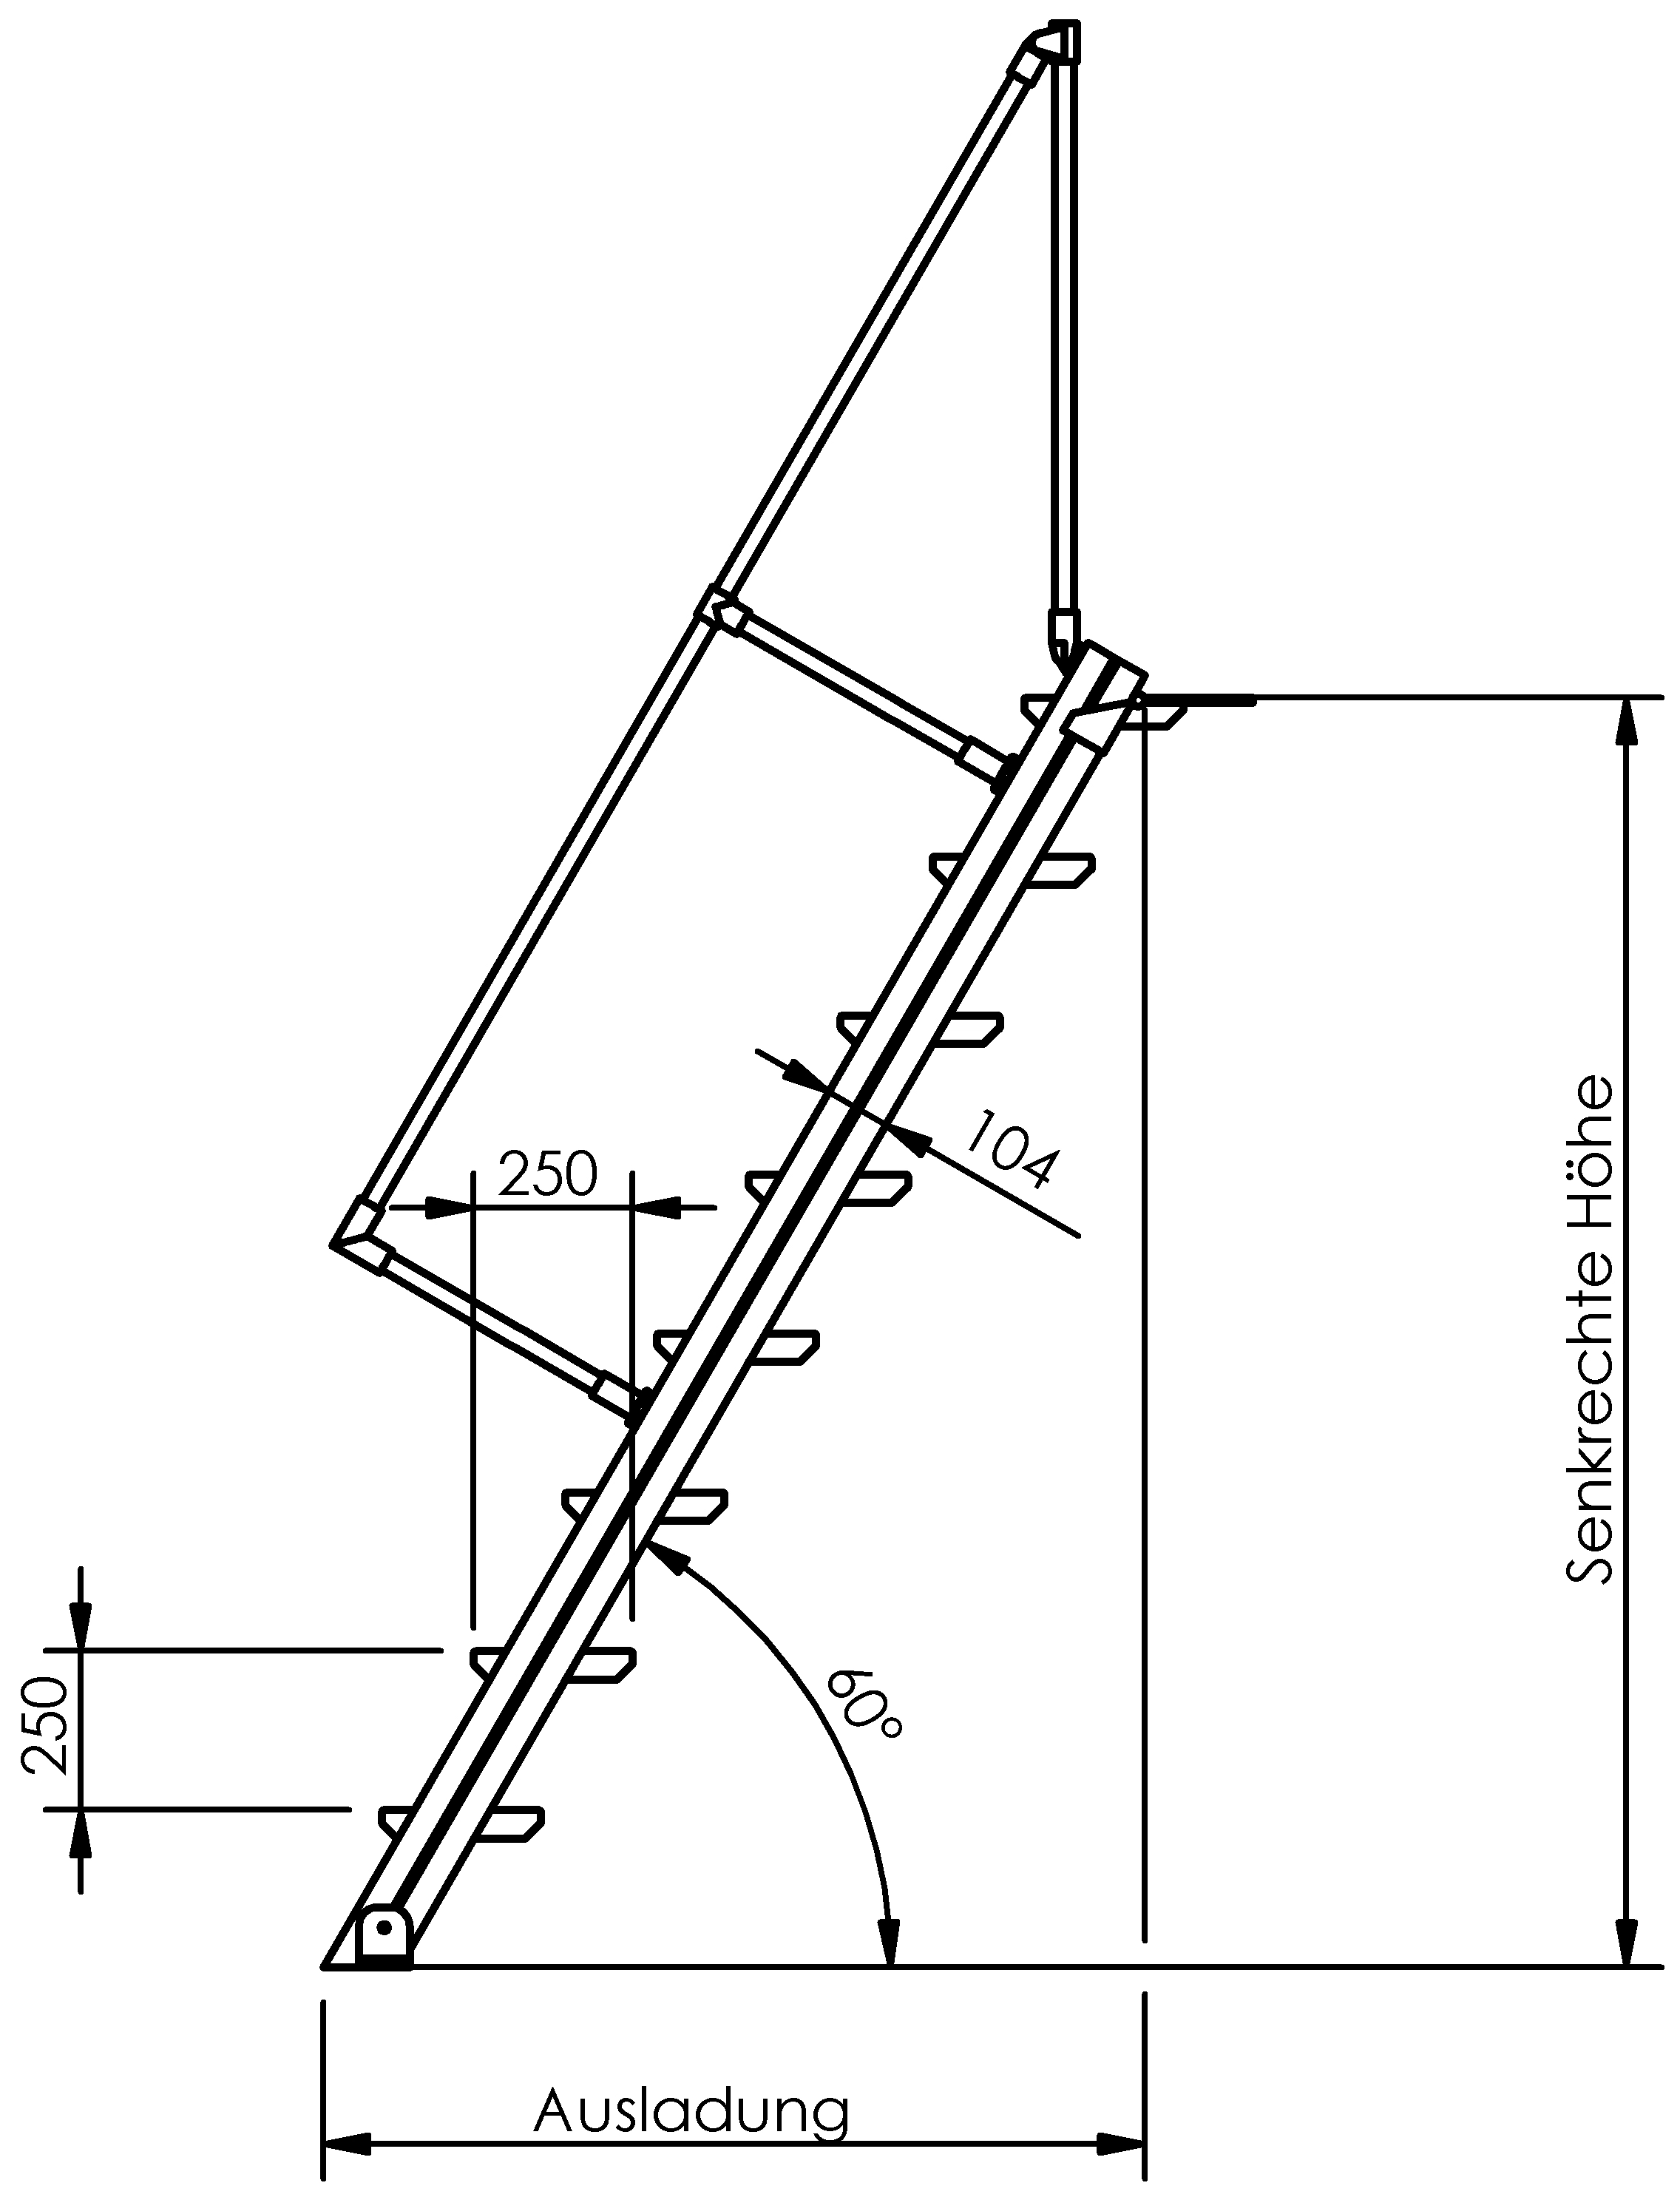 Selbstbautreppen, LW 800, Stufen aus Alu, Neigung 60°